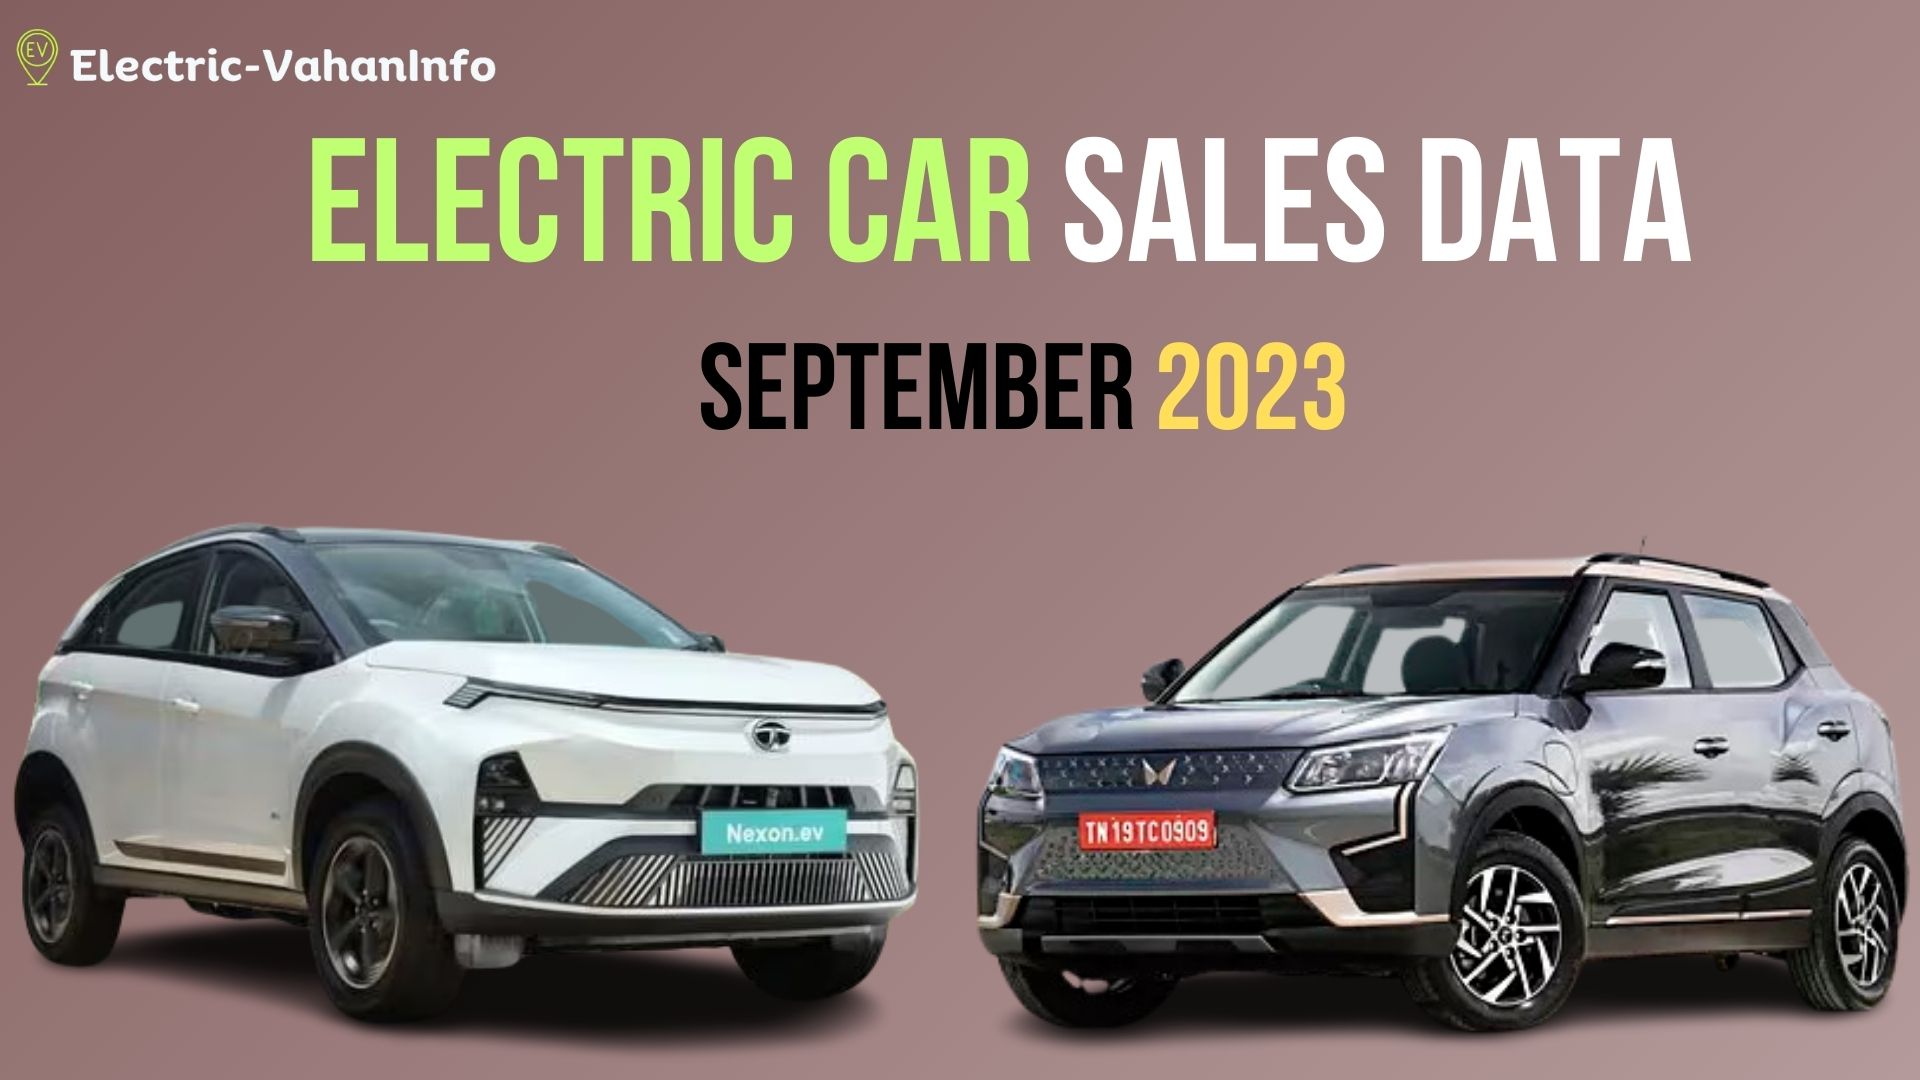 https://electric-vahaninfo.com/electric-car-sales-data-september-2023/